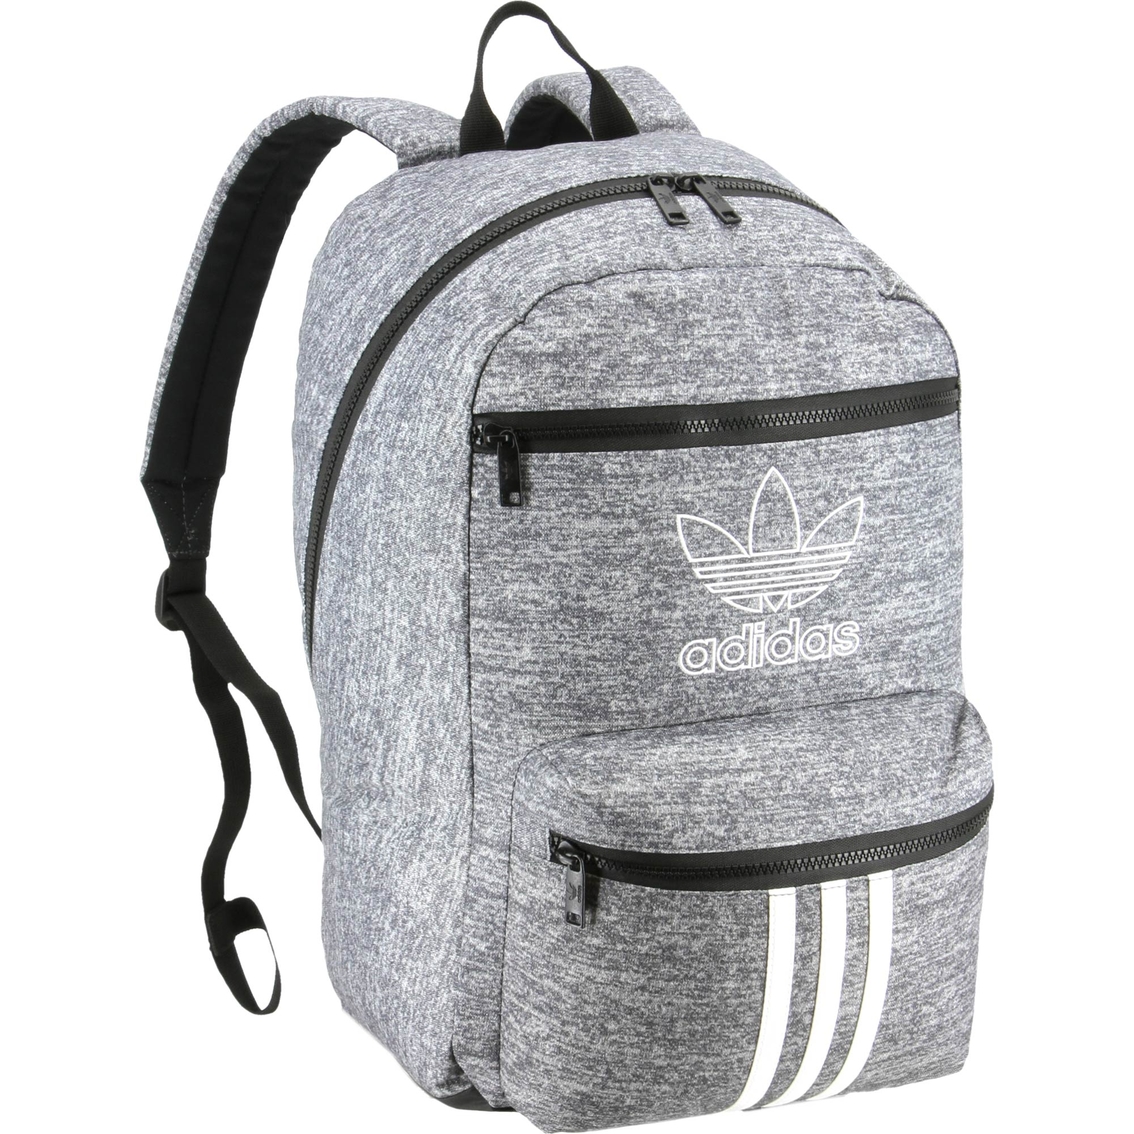 adidas national 3 stripe backpack